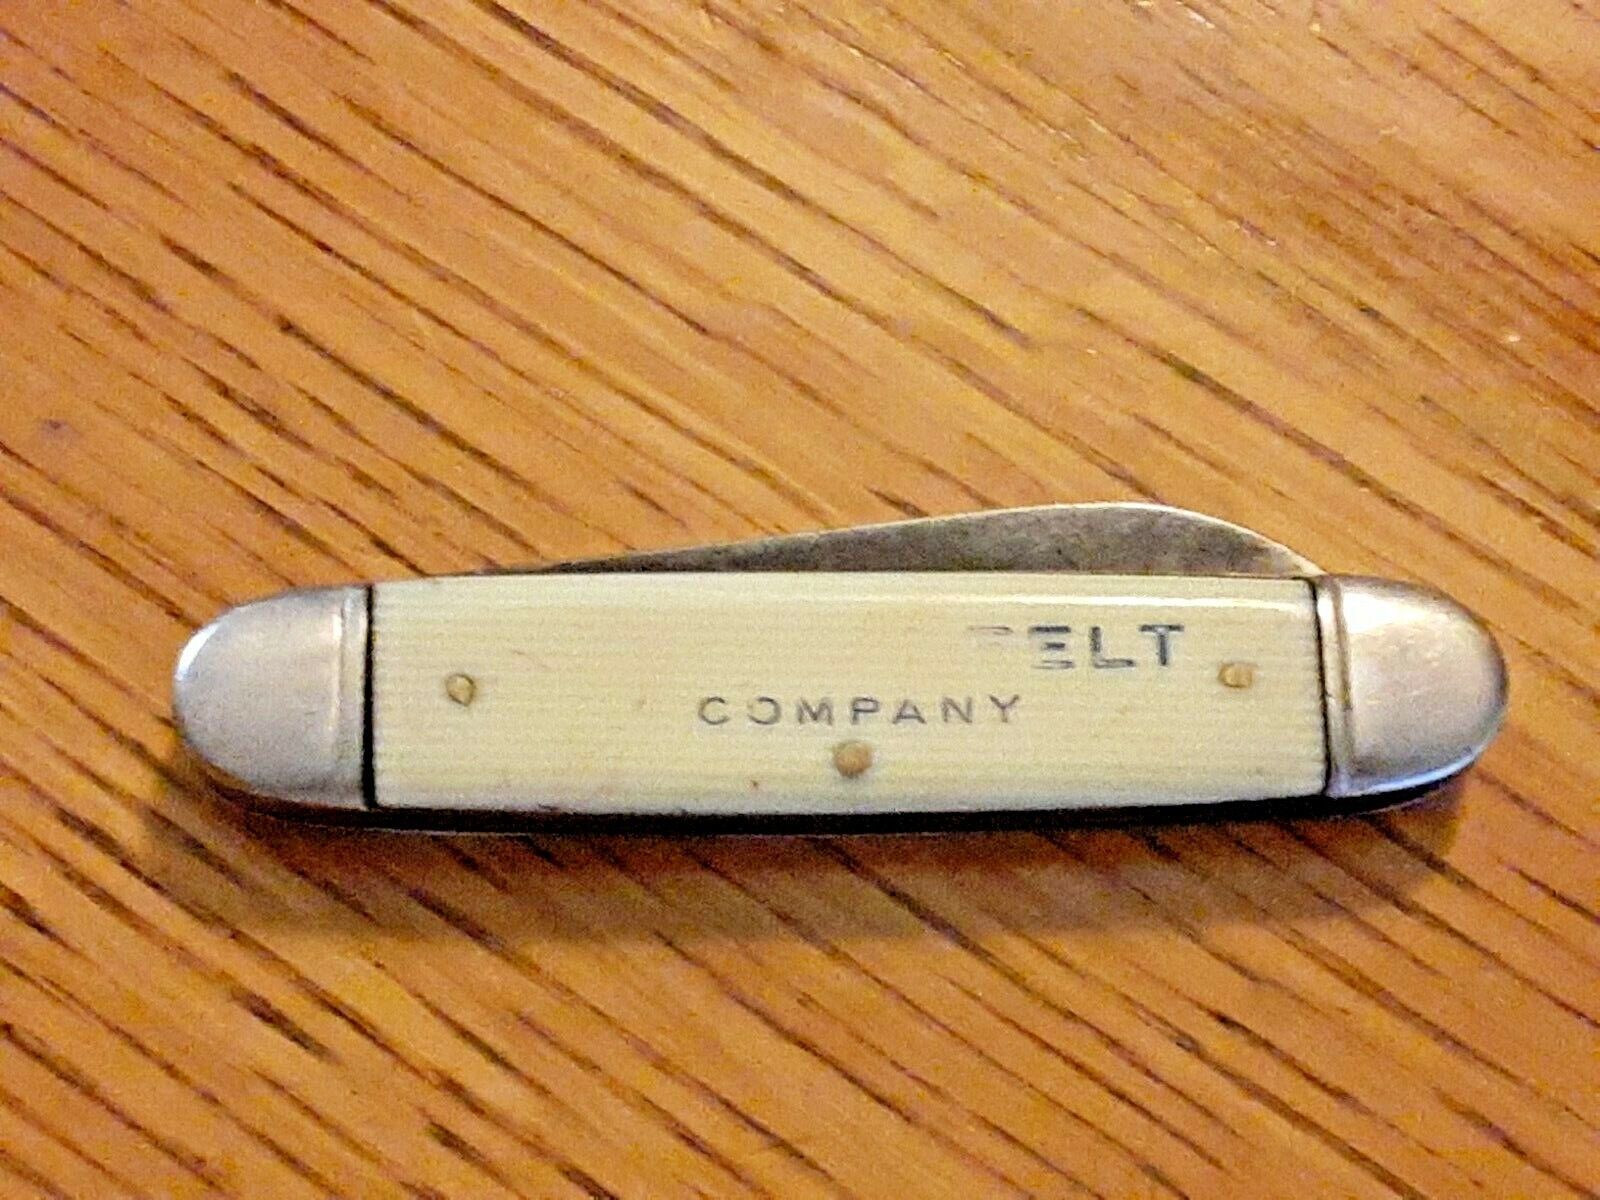 Vintage Camco (Camillus) USA 2 Blade Jack Knife "Albany Felt Company"1960 - 1970 - $29.99